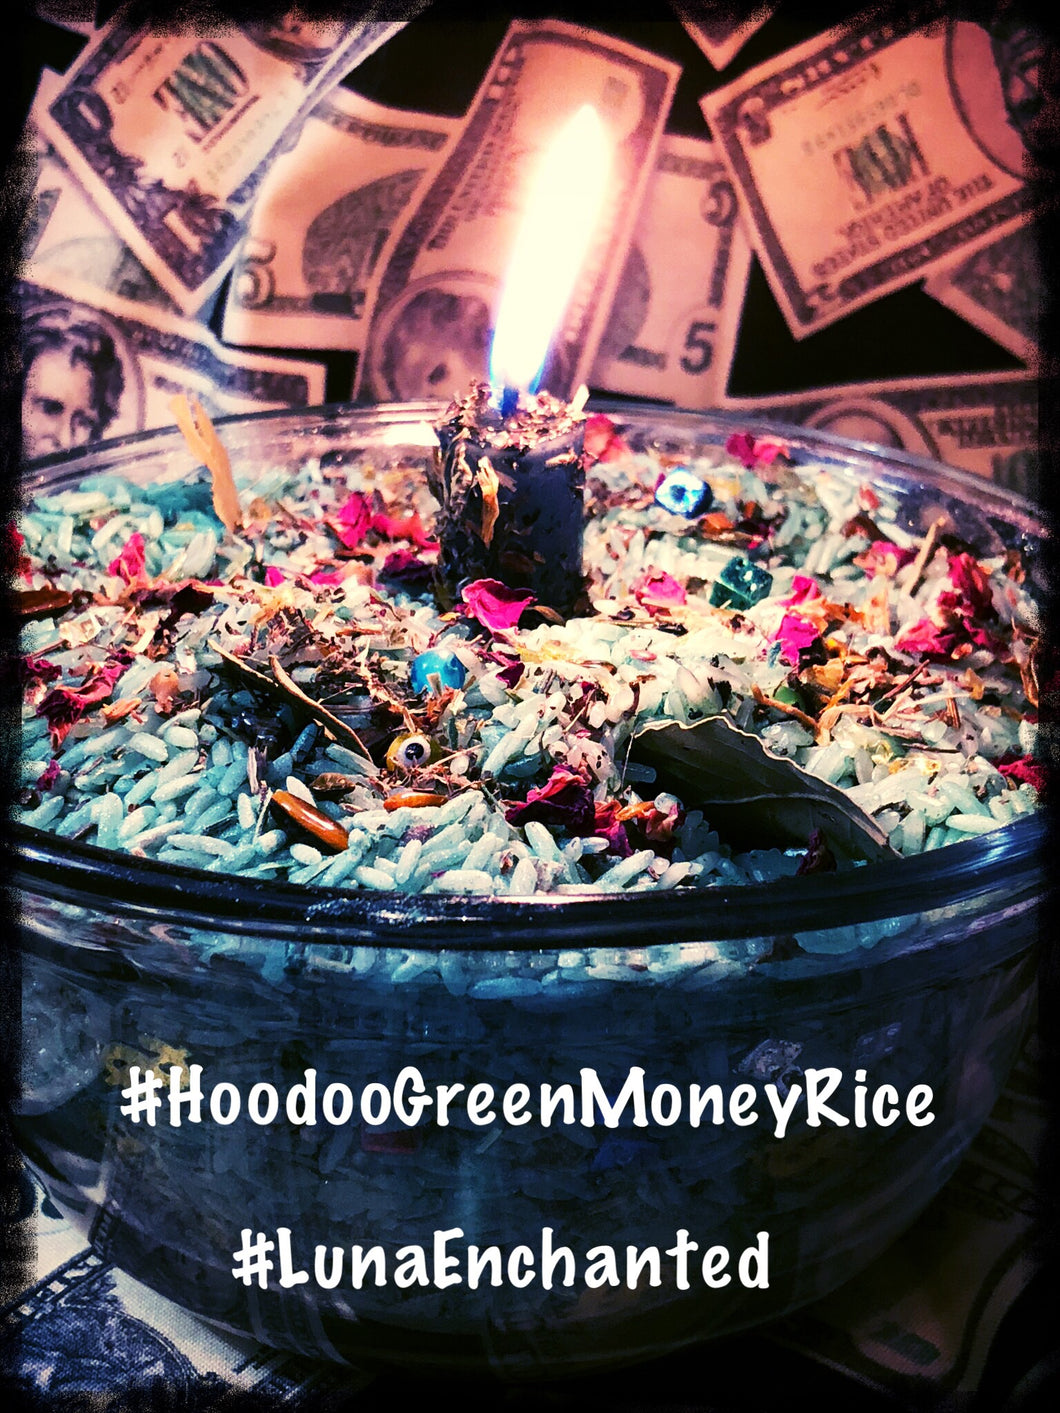 Hoodoo Green Money Rice